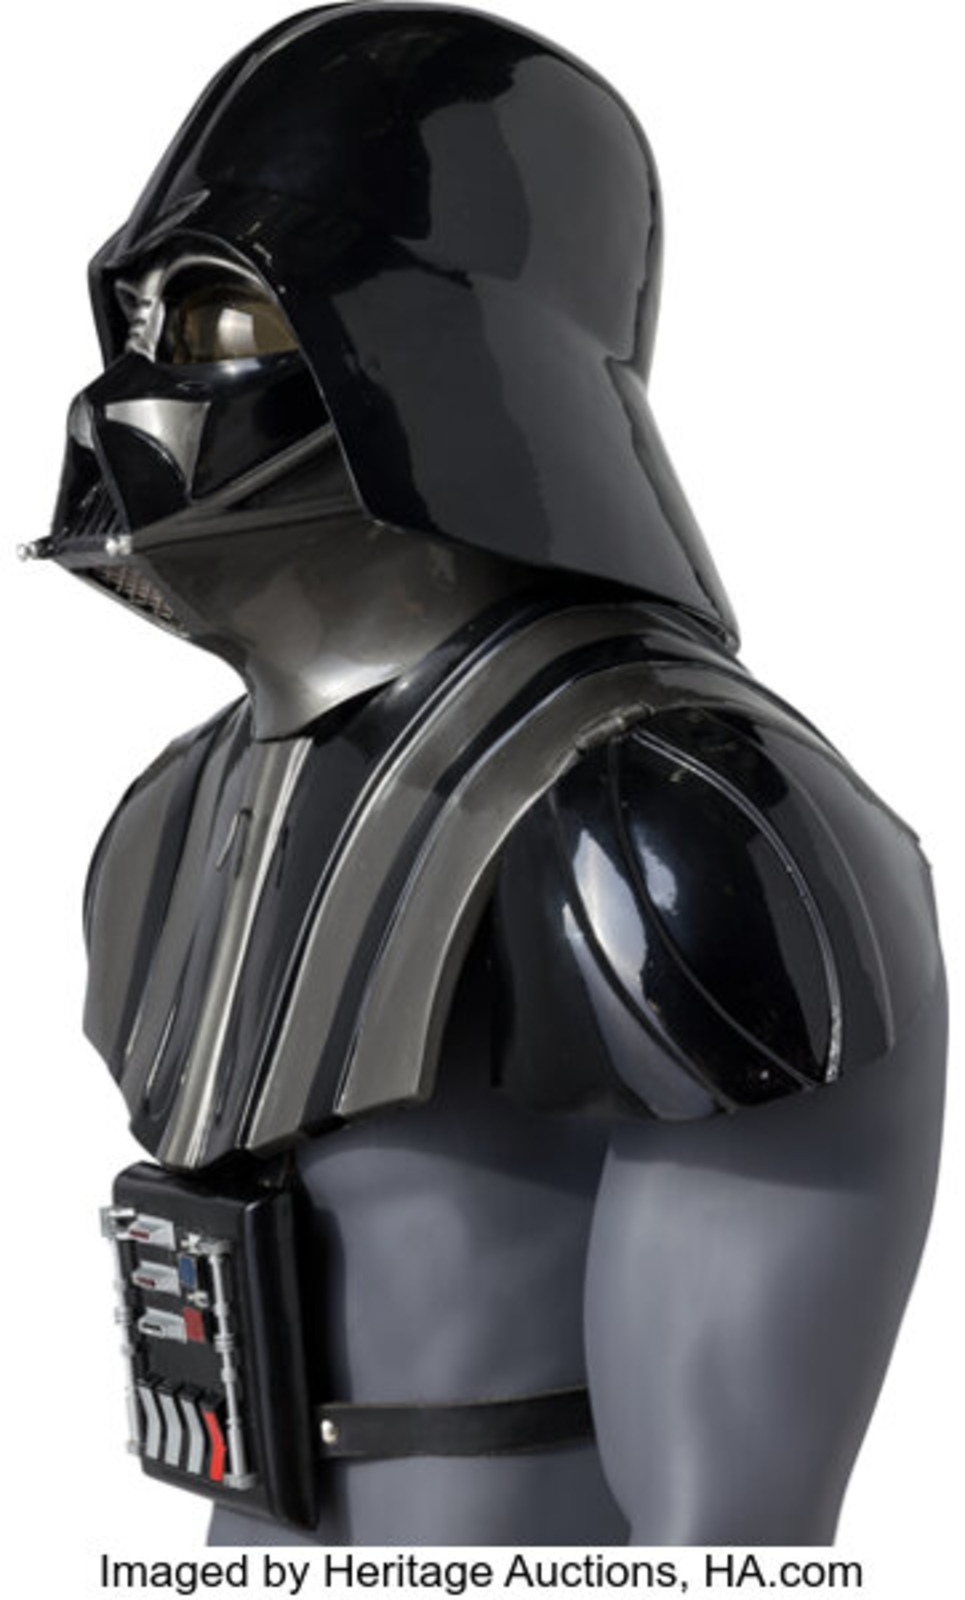 "Darth Vader" Promotional Helmet, Shoulder Armor and Chest Box.